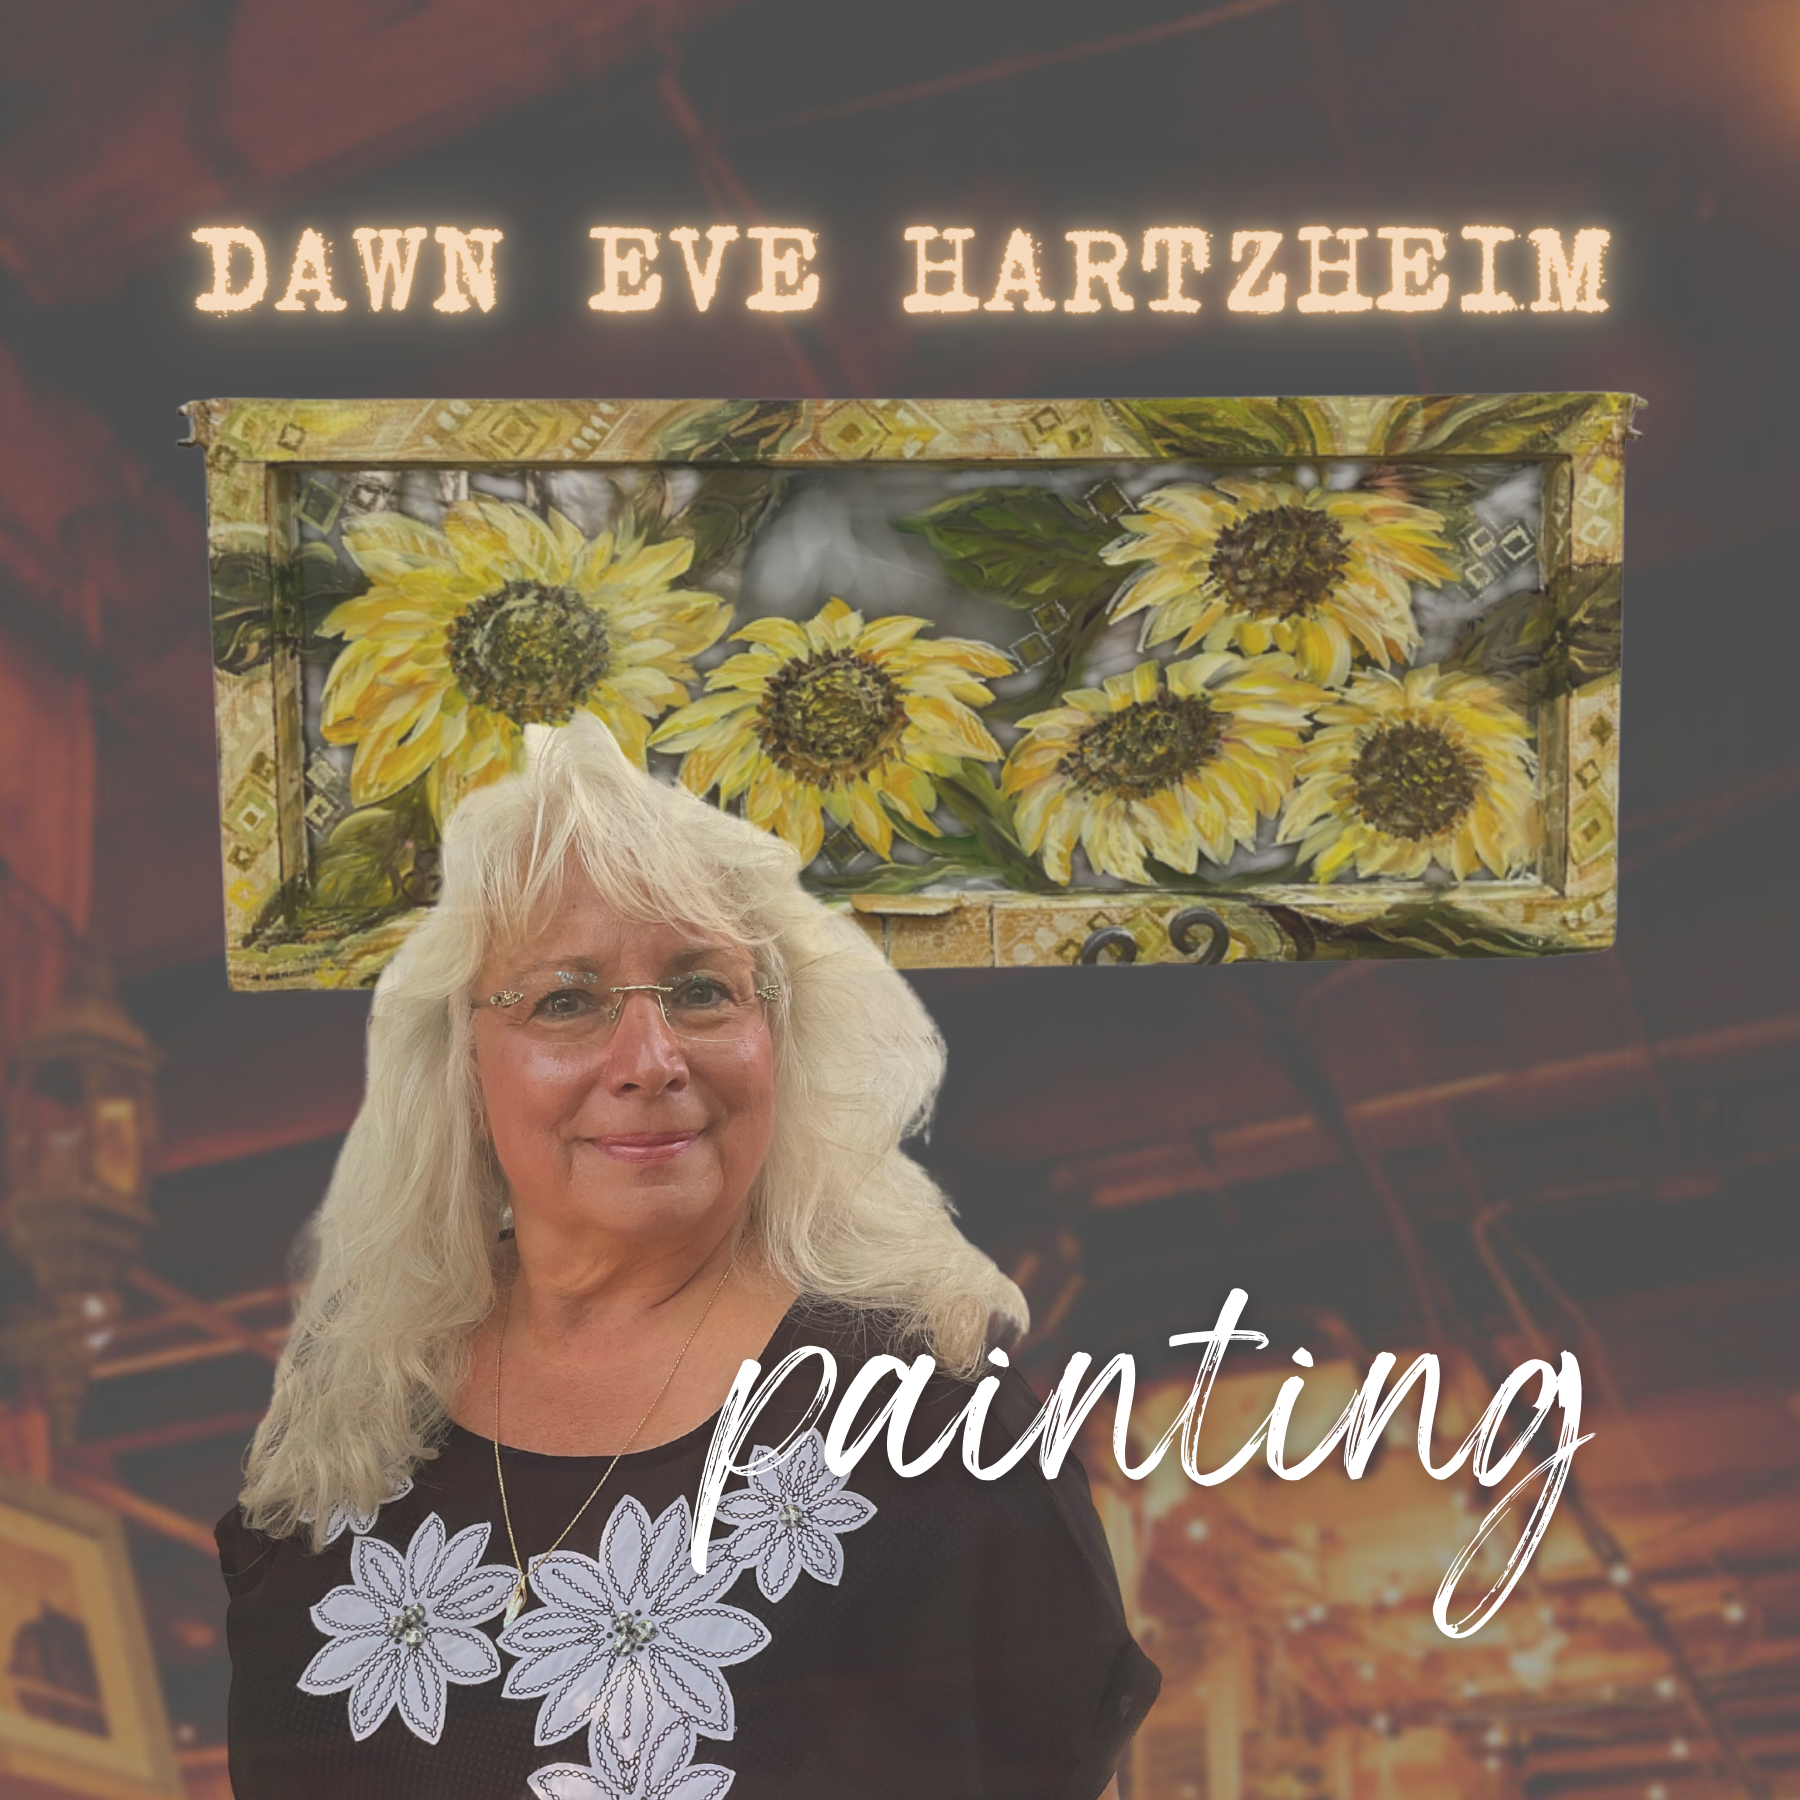 Painter: Dawn Eve Hartzheim